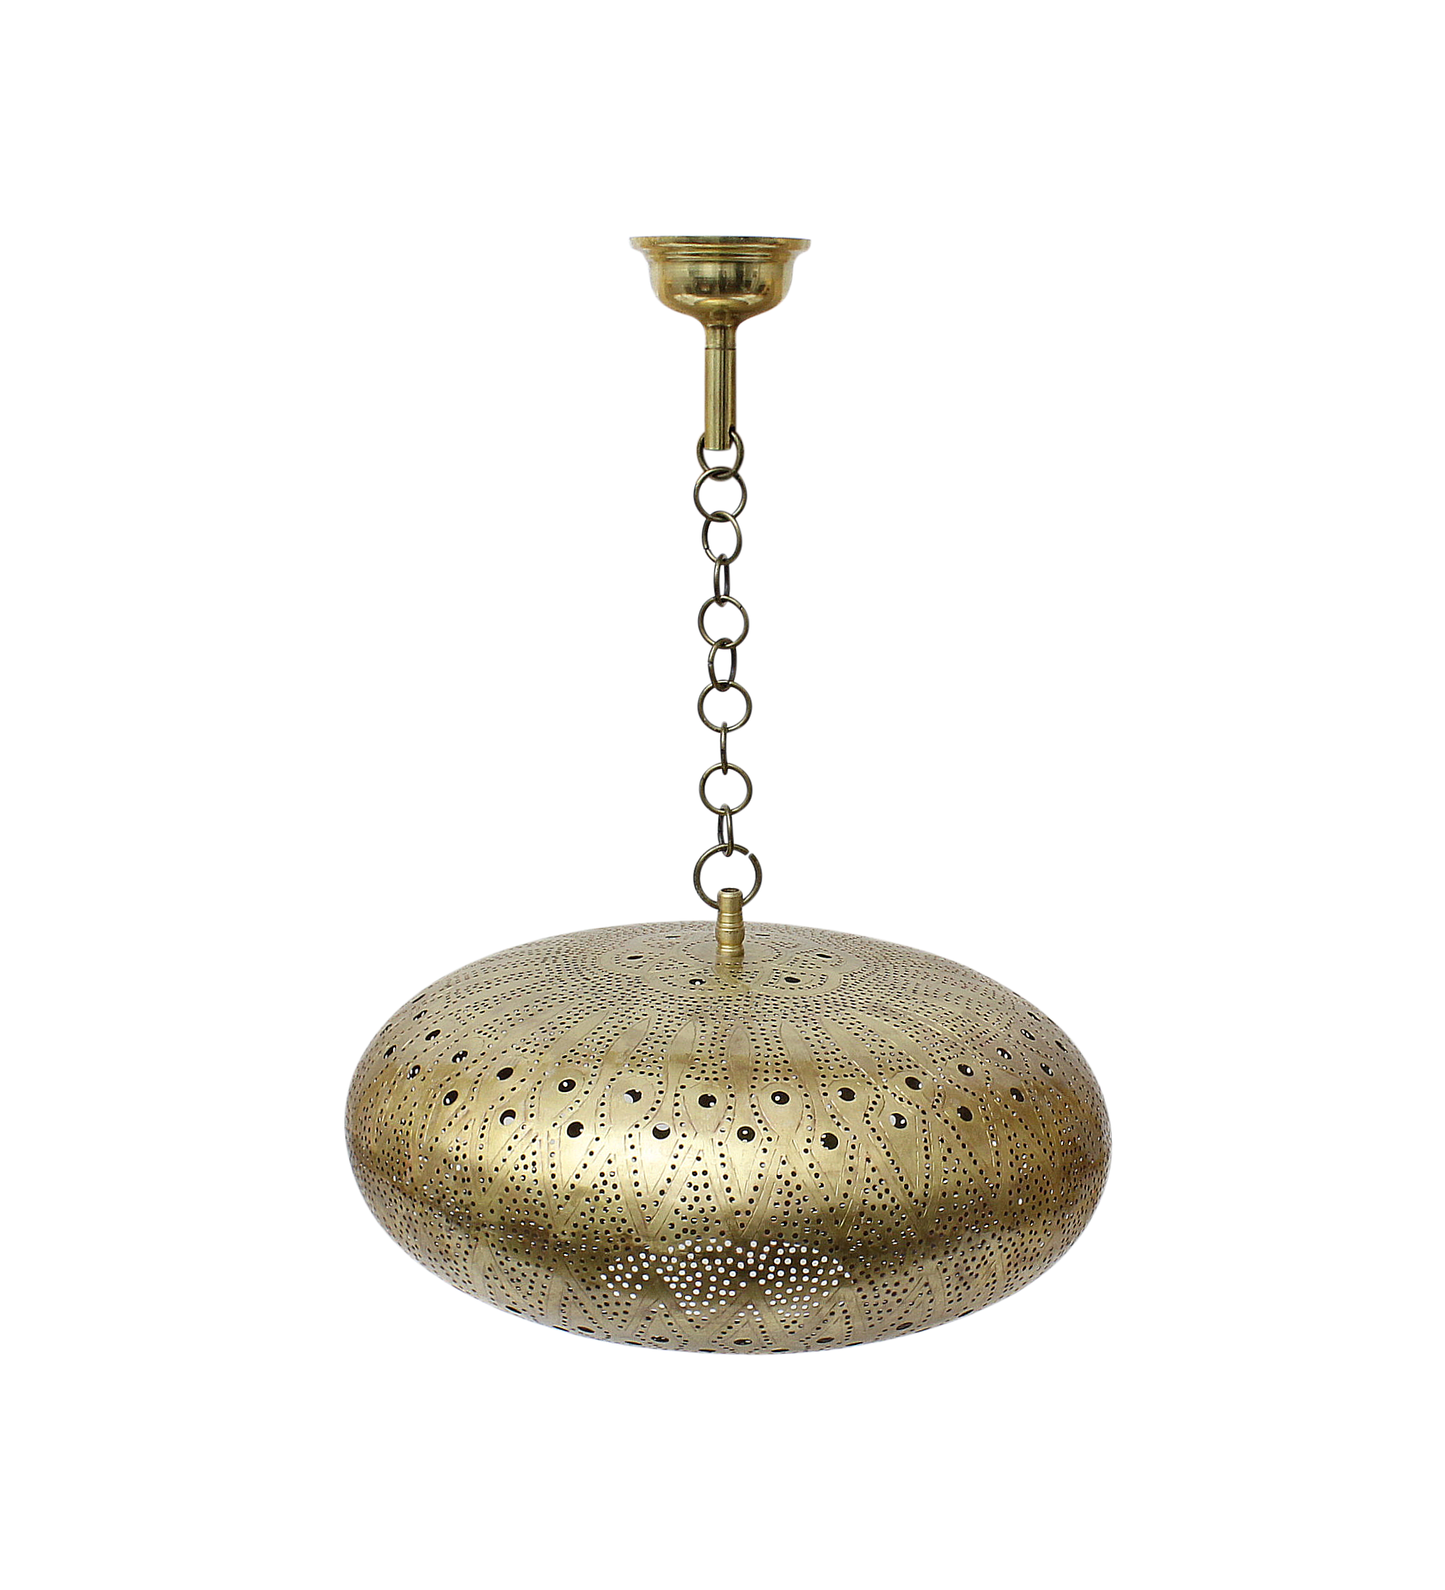 Moroccan Brass Lamp Pendant Ceiling Light Lantern 40x16cm 15.8x6.3in. (ML5)